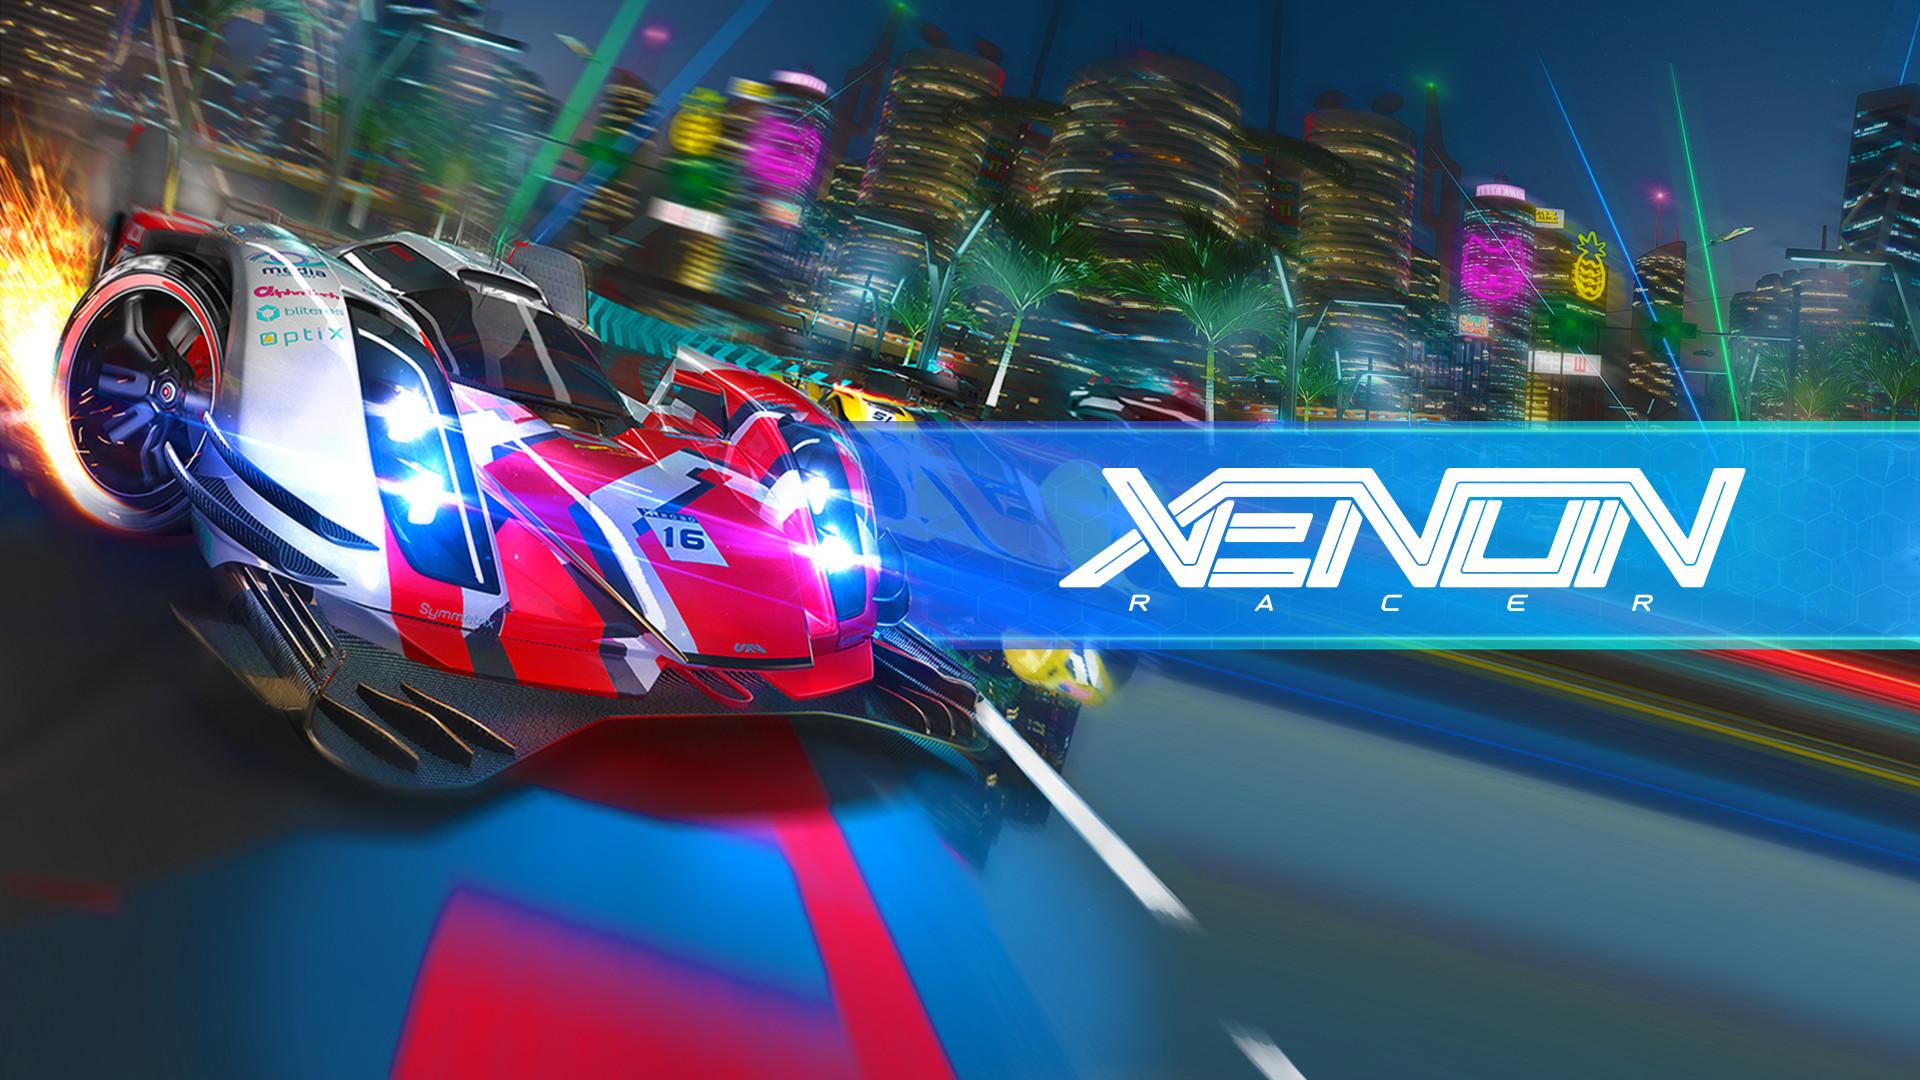 Xenon Racer review: Tokyo Drifting into the future